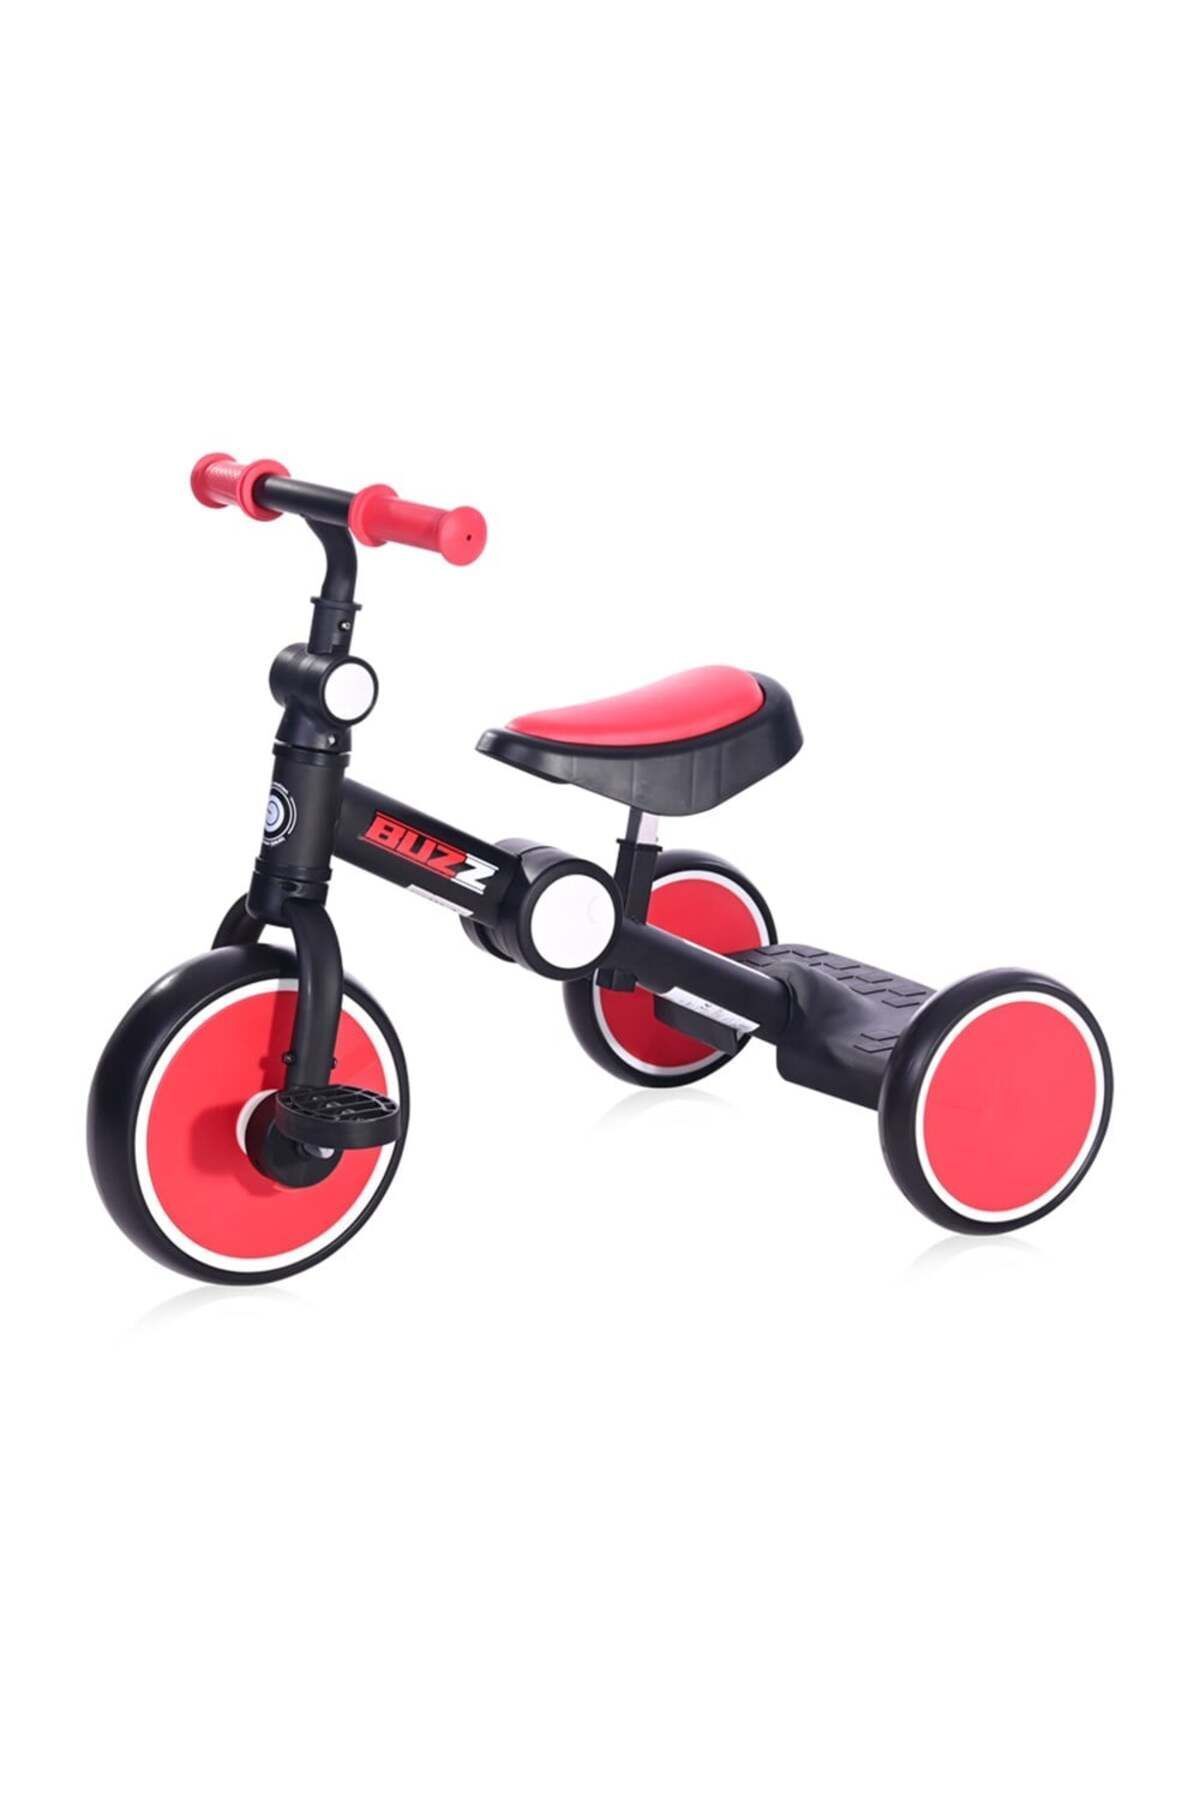 LORELLİ Lorelli Buzz Üç Tekerlekli Bisiklet - Kırmızı